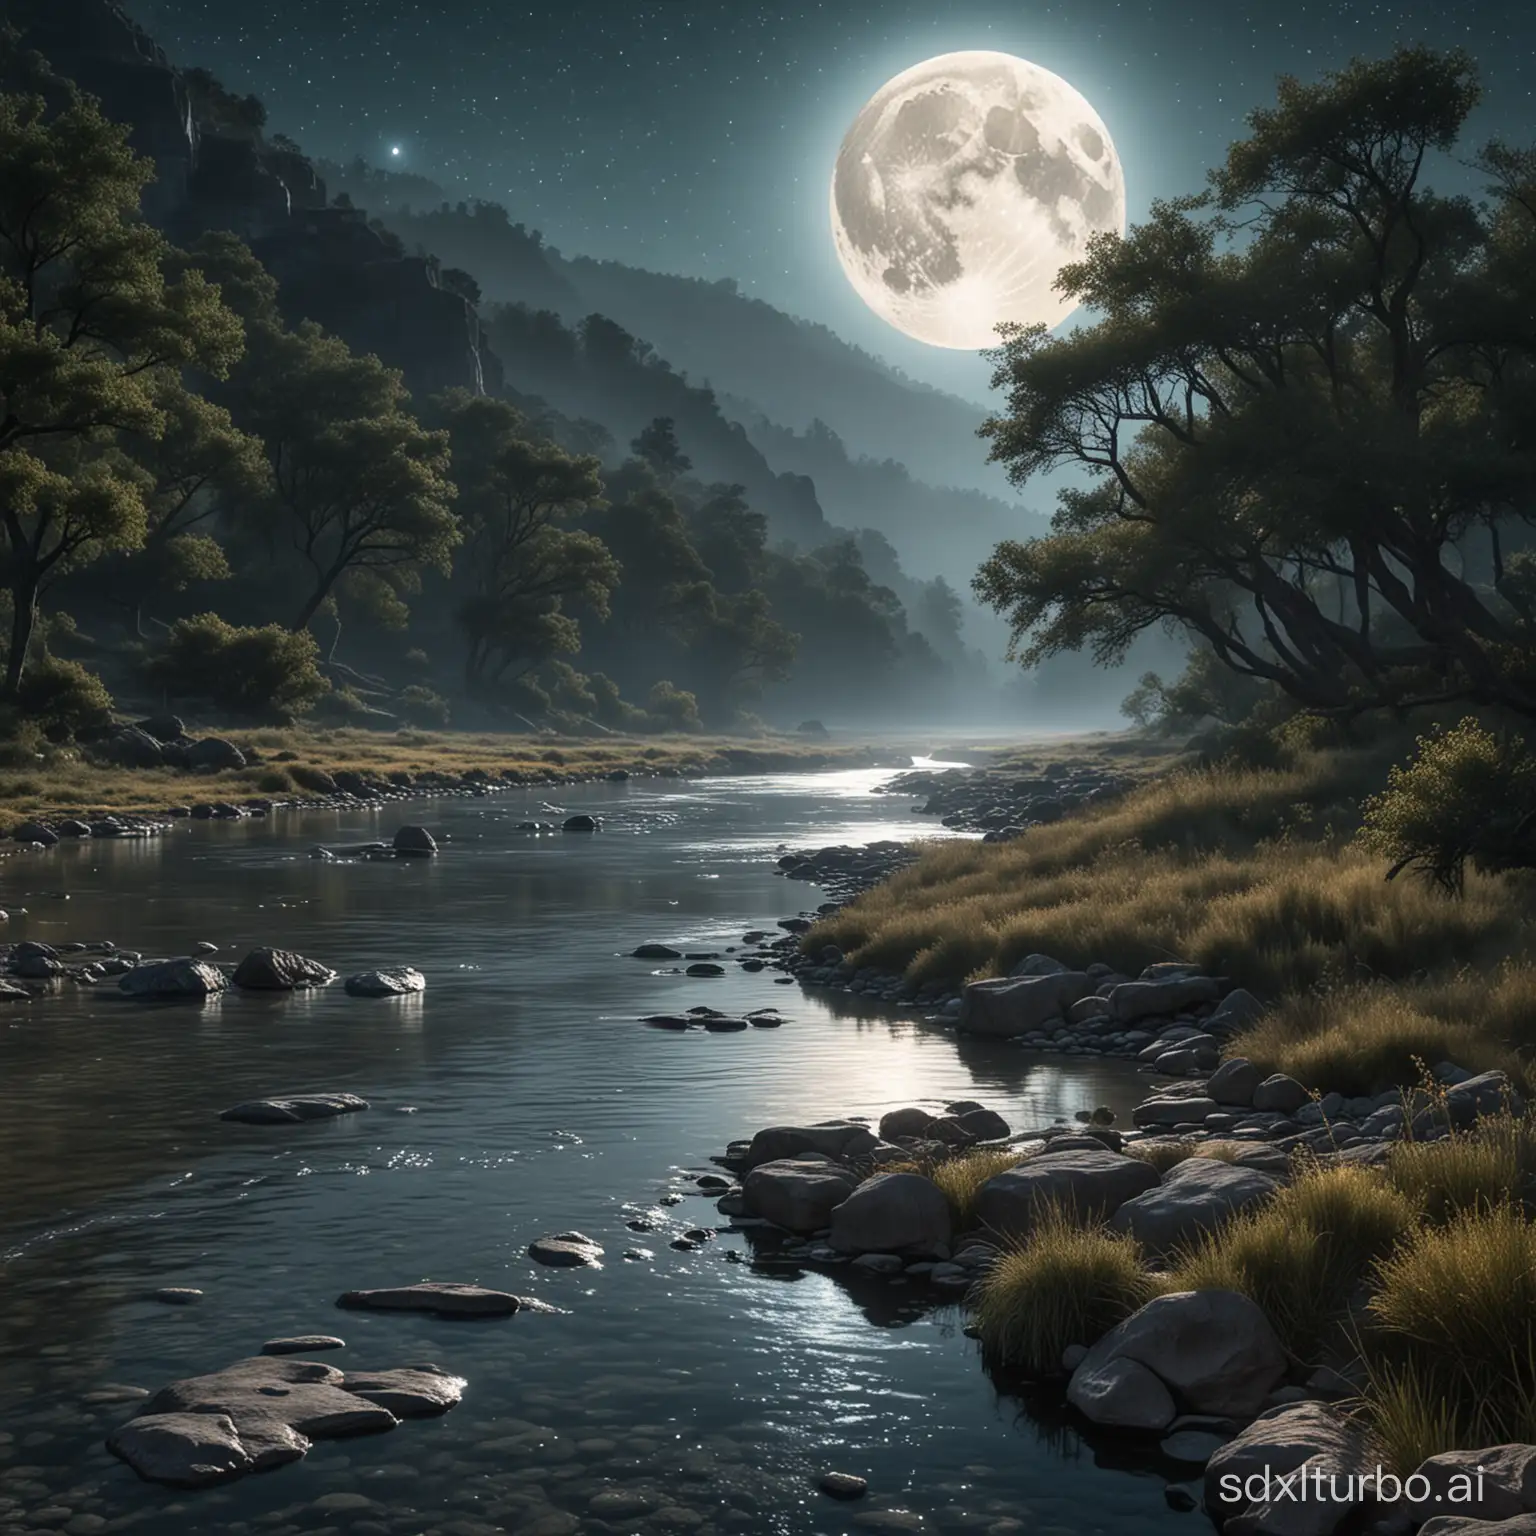 Shimmering-River-Beneath-Ancient-Moon-Serene-Night-Landscape-Art